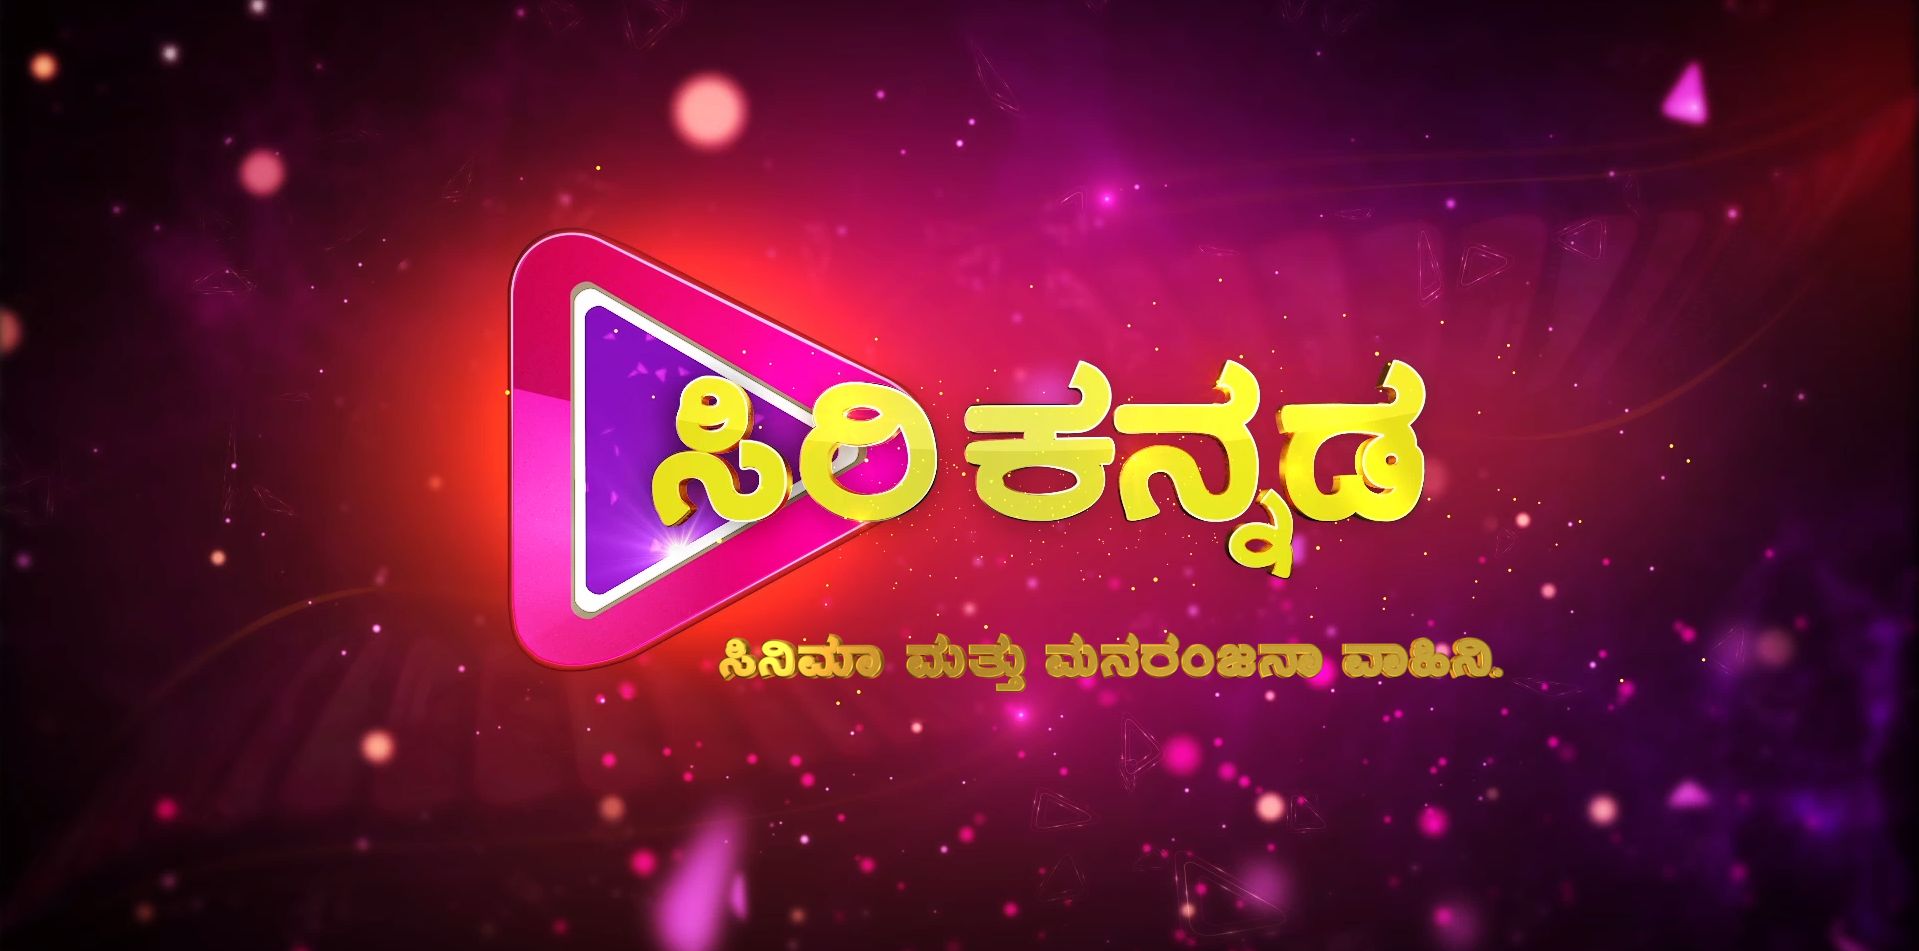 Aganinakshetra, Tarangini, Jagadekaveera, Gombe Mane - Siri Kannada Serials 6